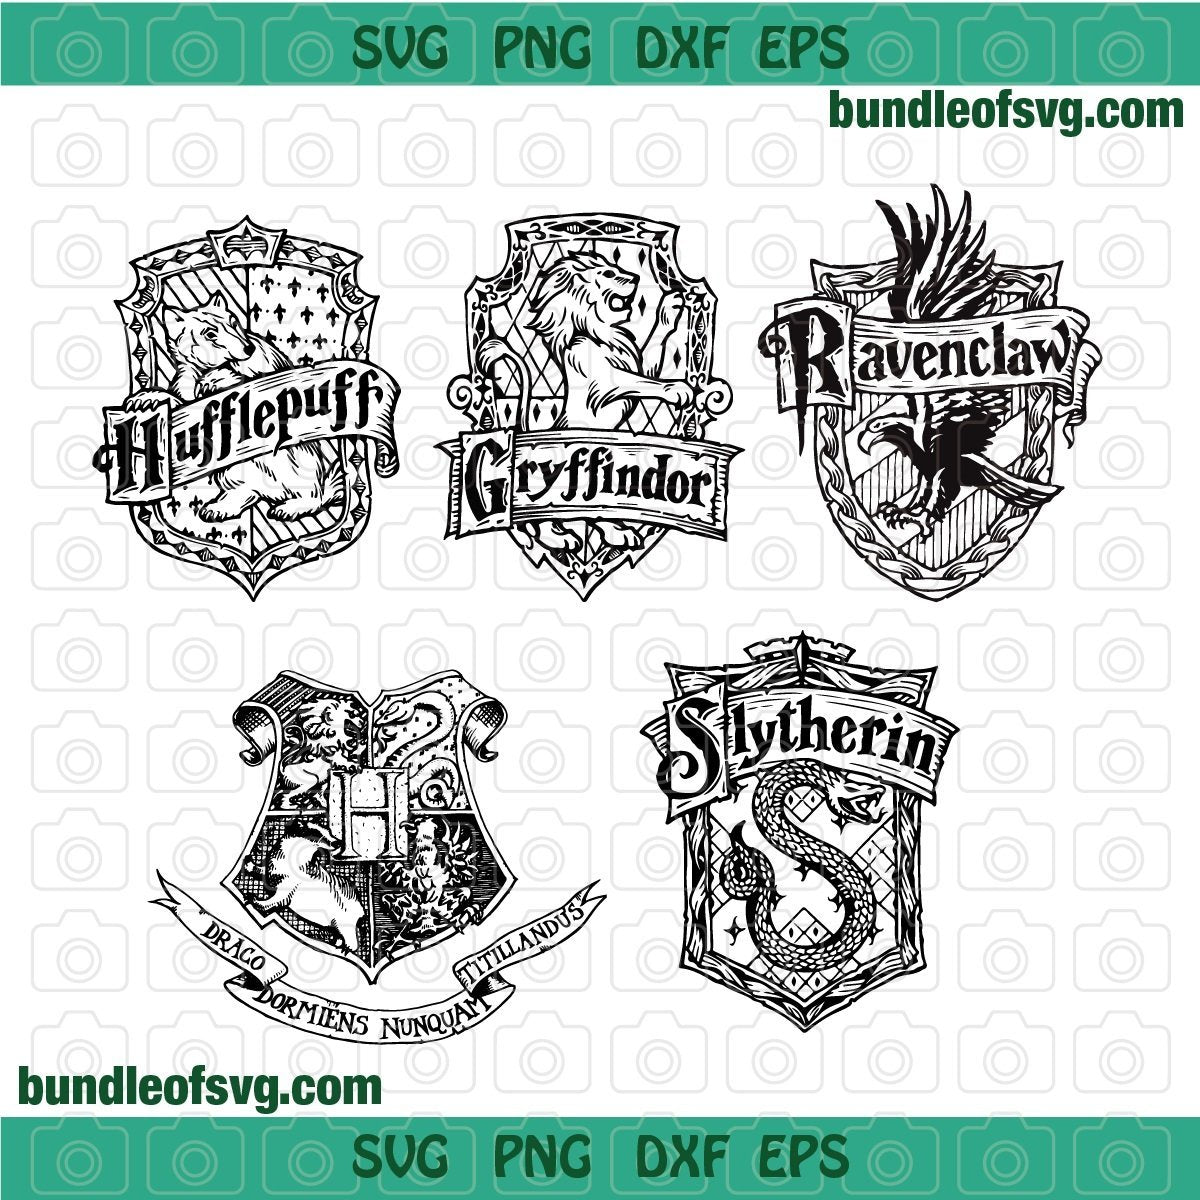 Harry Potter Hogwarts Houses Ravenclaw Hufflepuff Gryffindor 